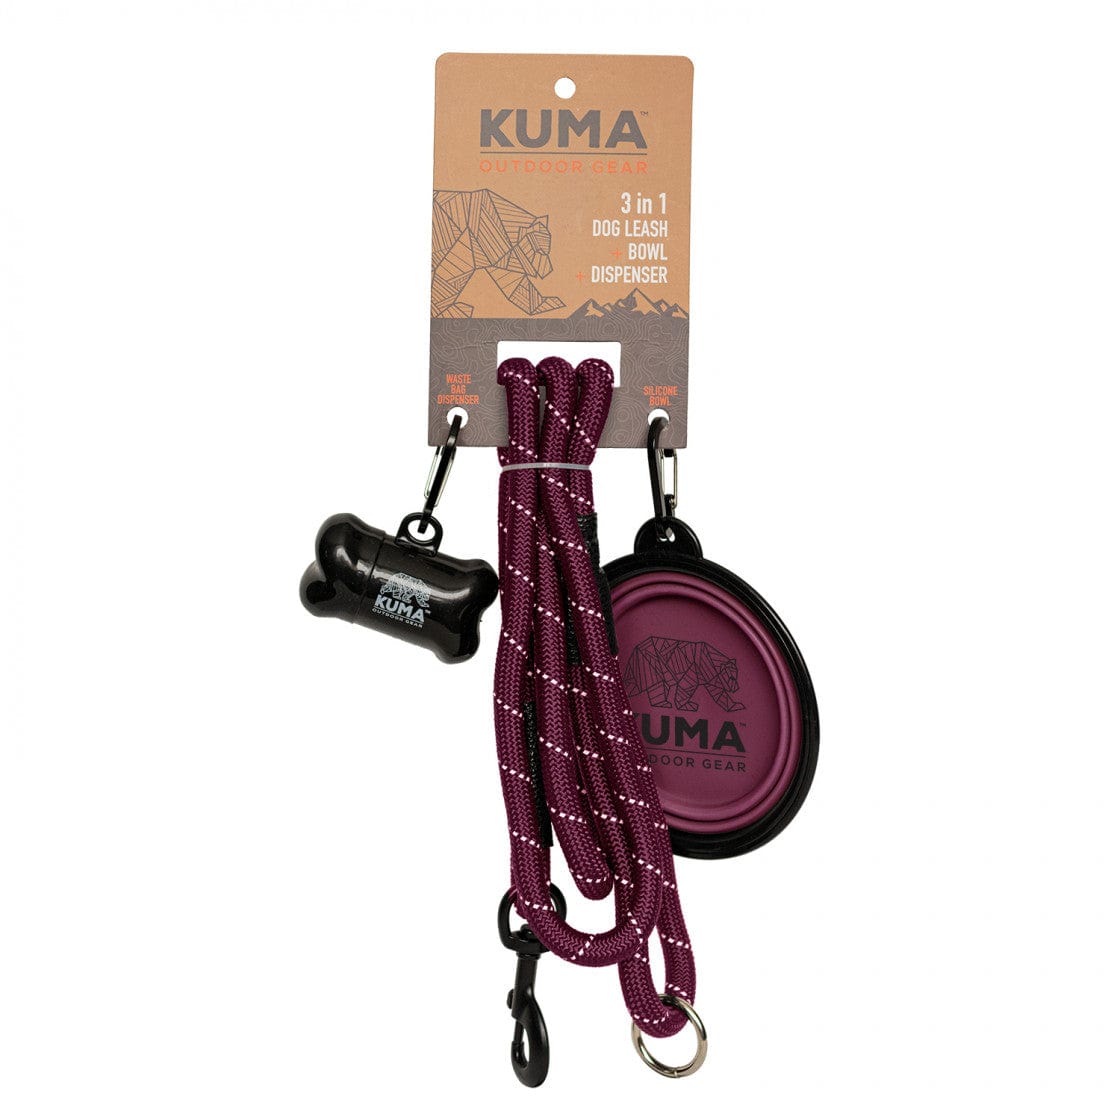 Kuma Outdoor Gear Qualifies for Free Shipping Kuma Outdoor Gear 3-In-1 Dog Leash Purple/Gray #KM-31DL-PUR